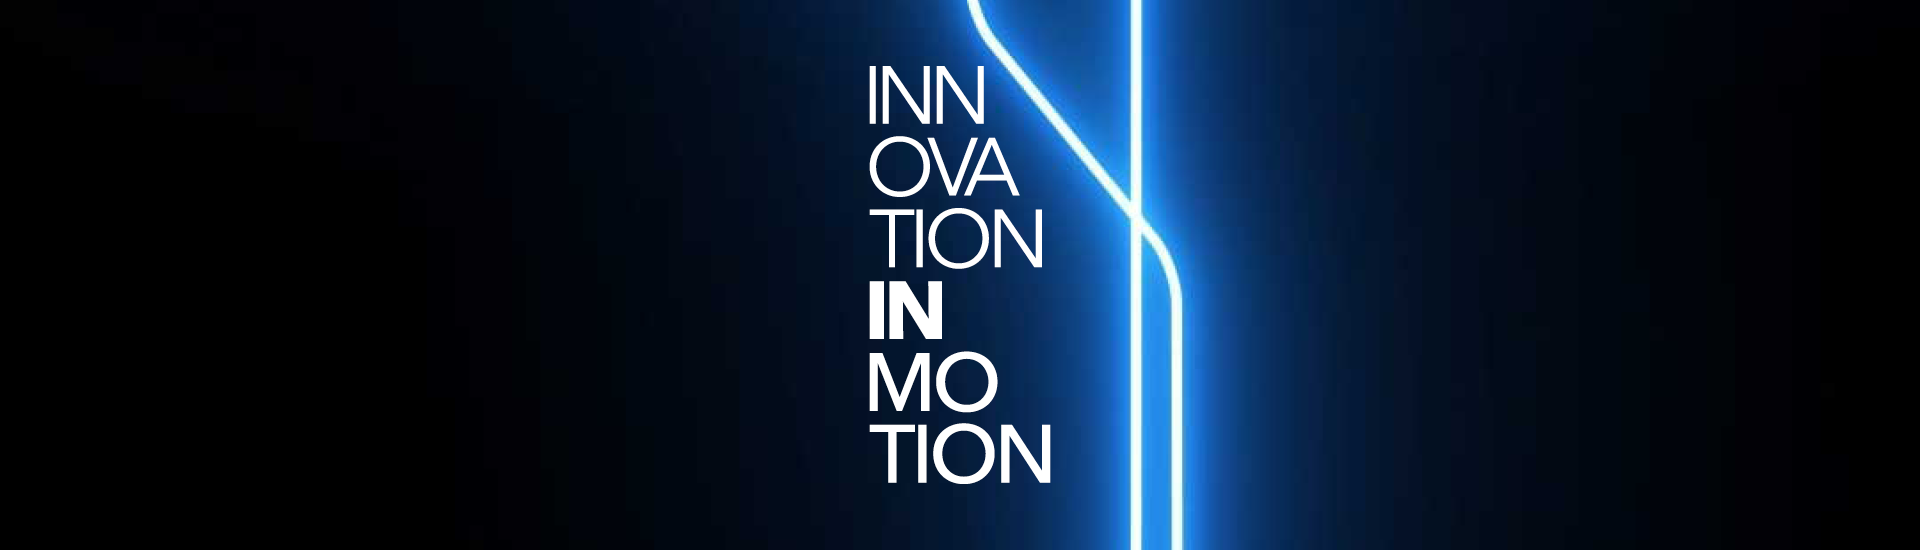 Innovation in motion